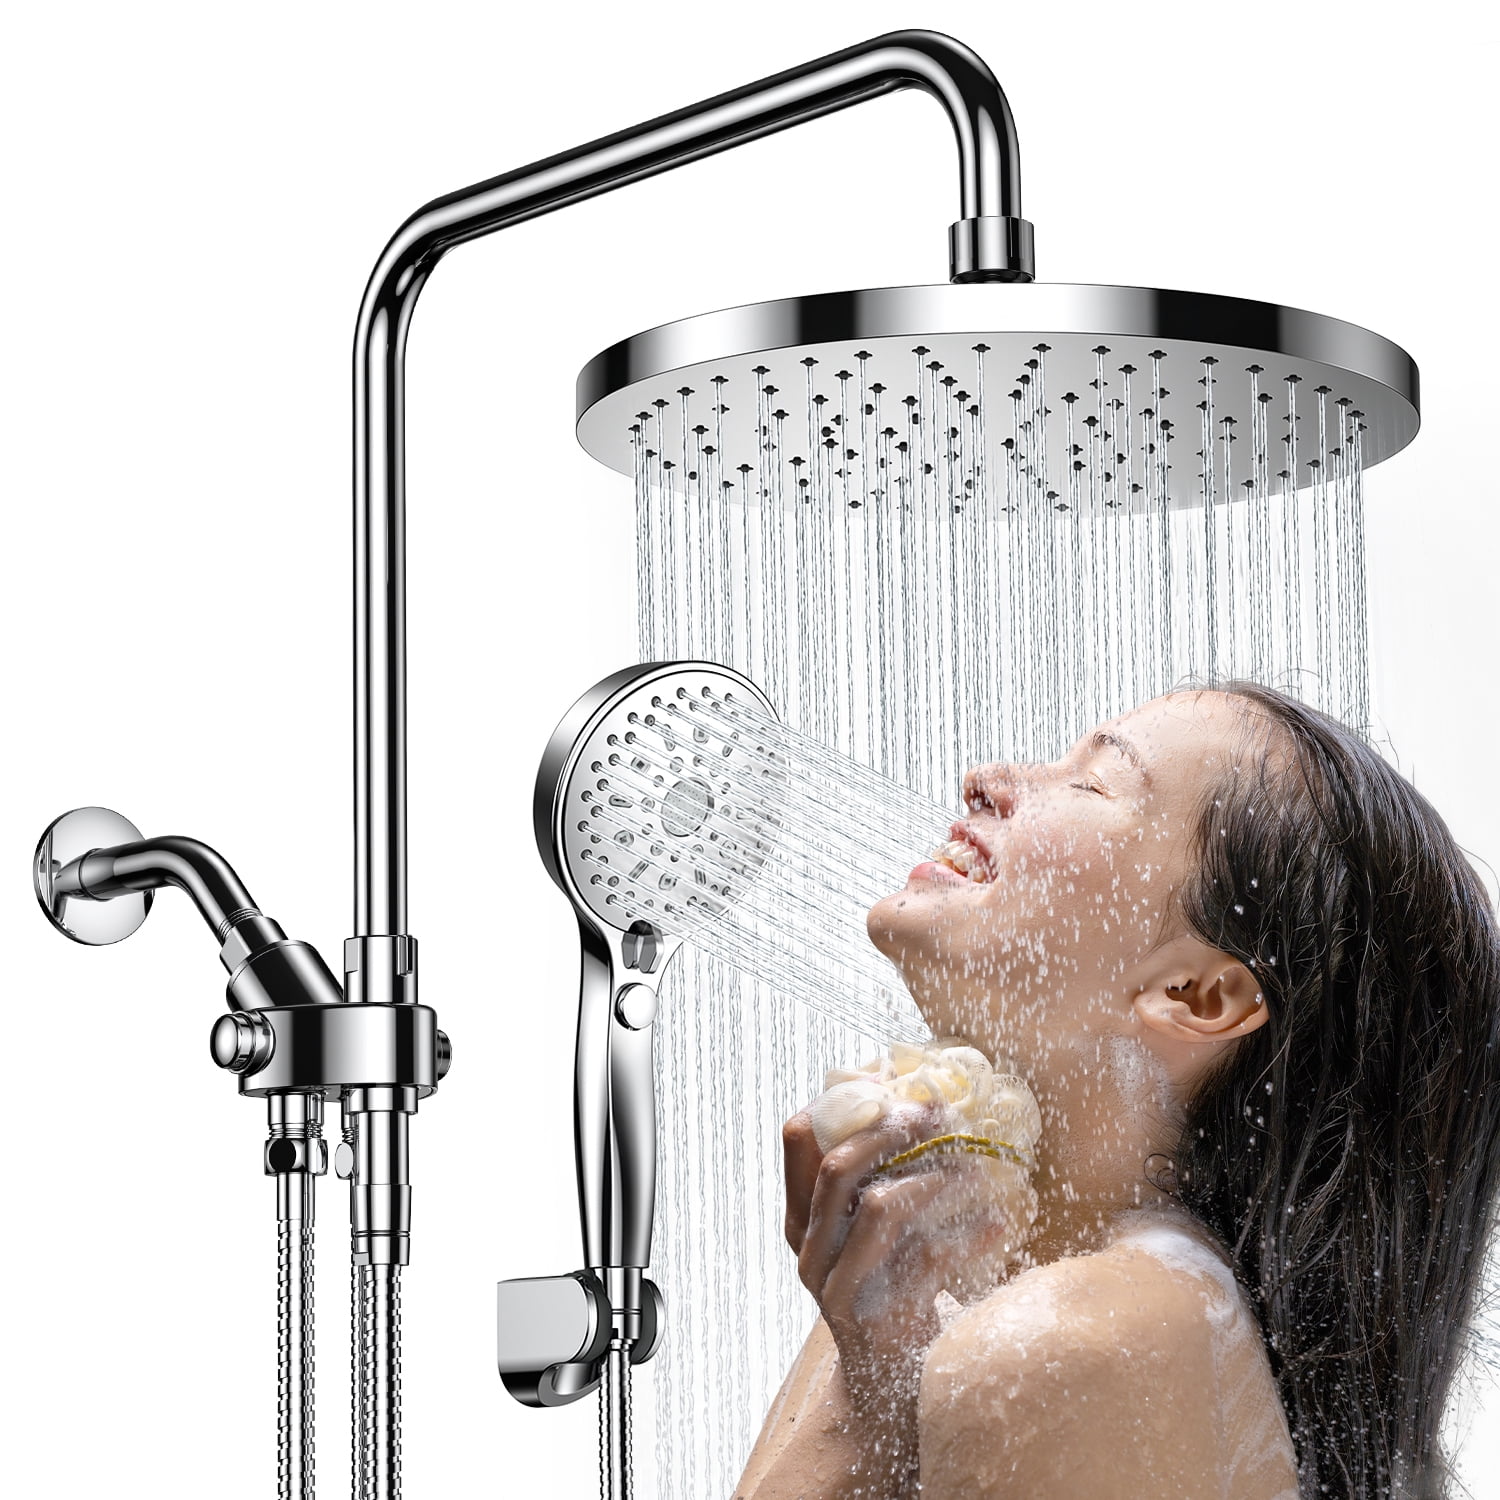 VALSEEL Shower Head - High-Pressure Handheld Showerhead with